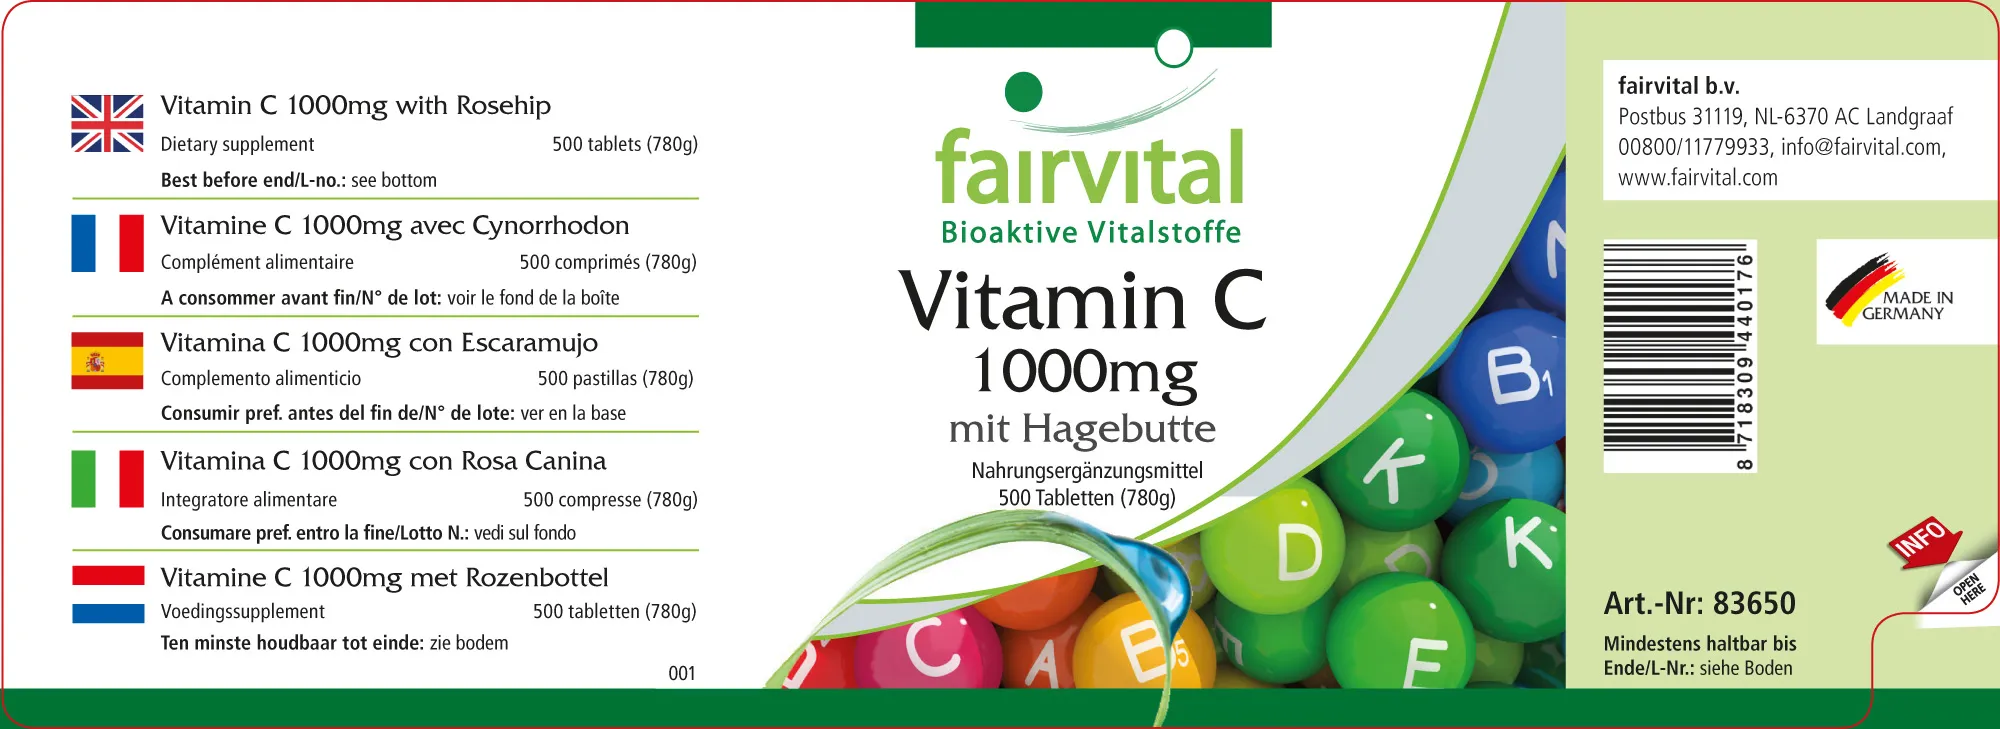 Vitamine C 1000mg avec cynorrhodon - 500 comprimés